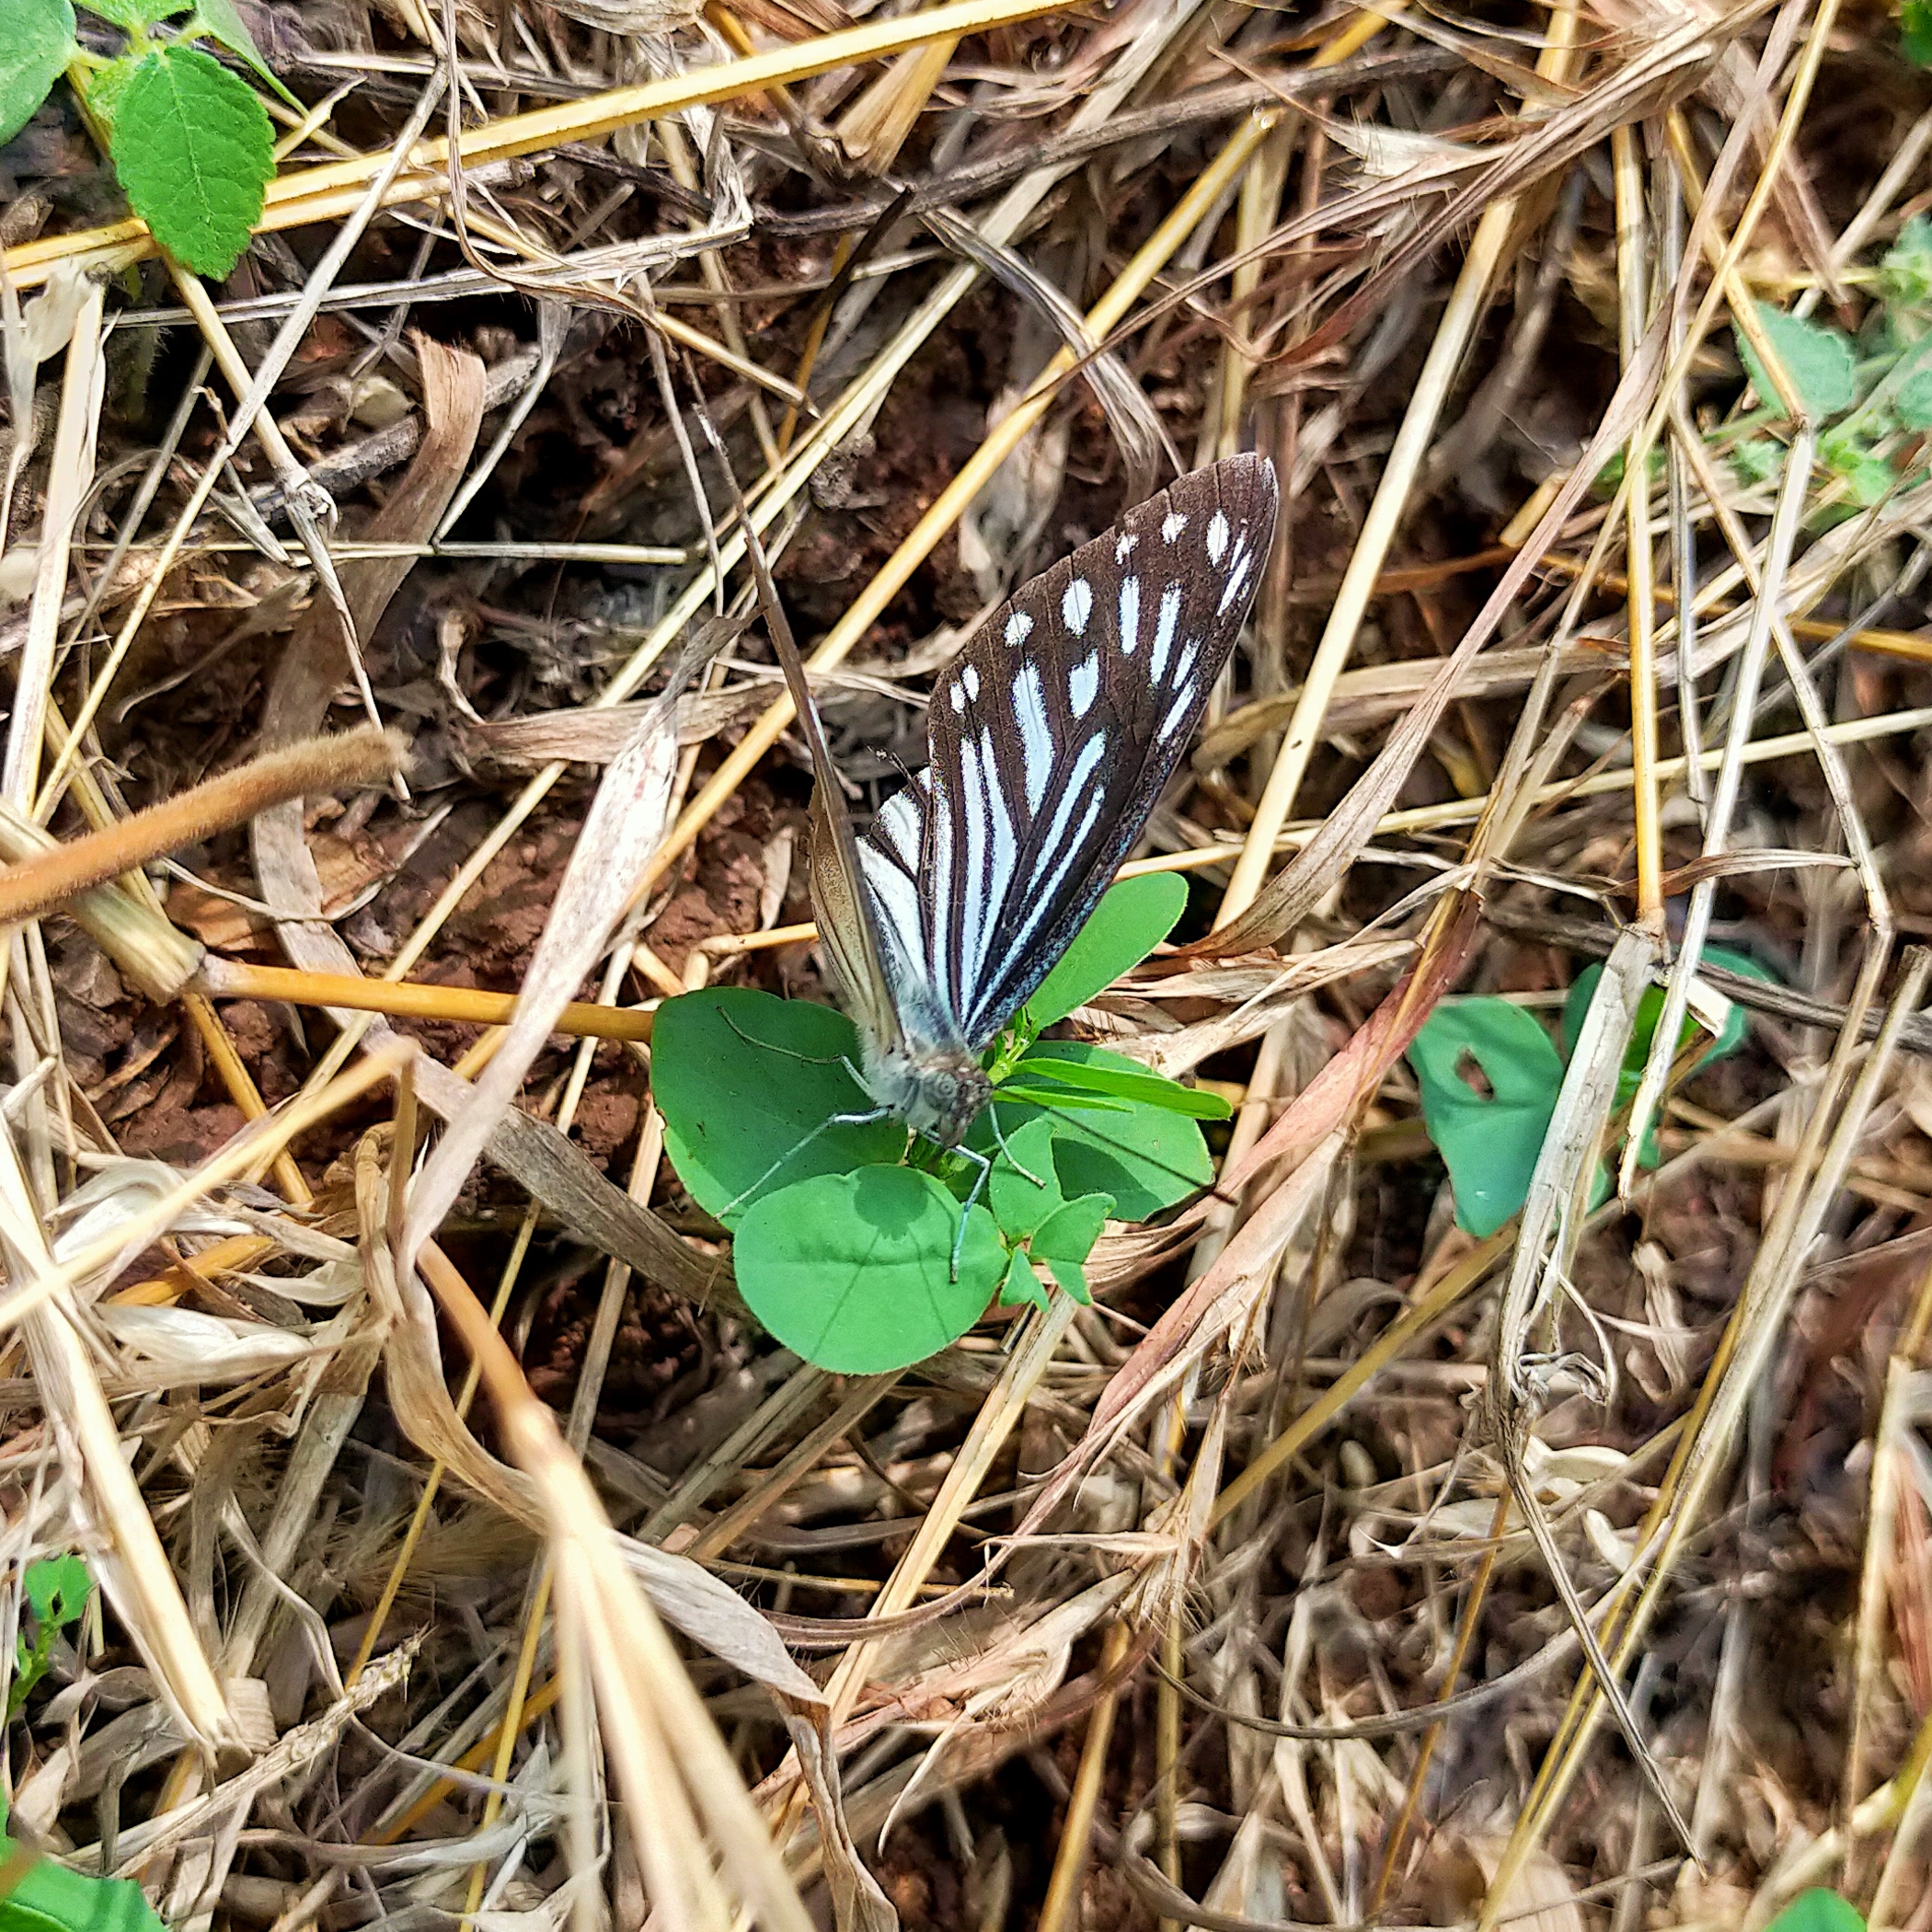 butterfly on grass